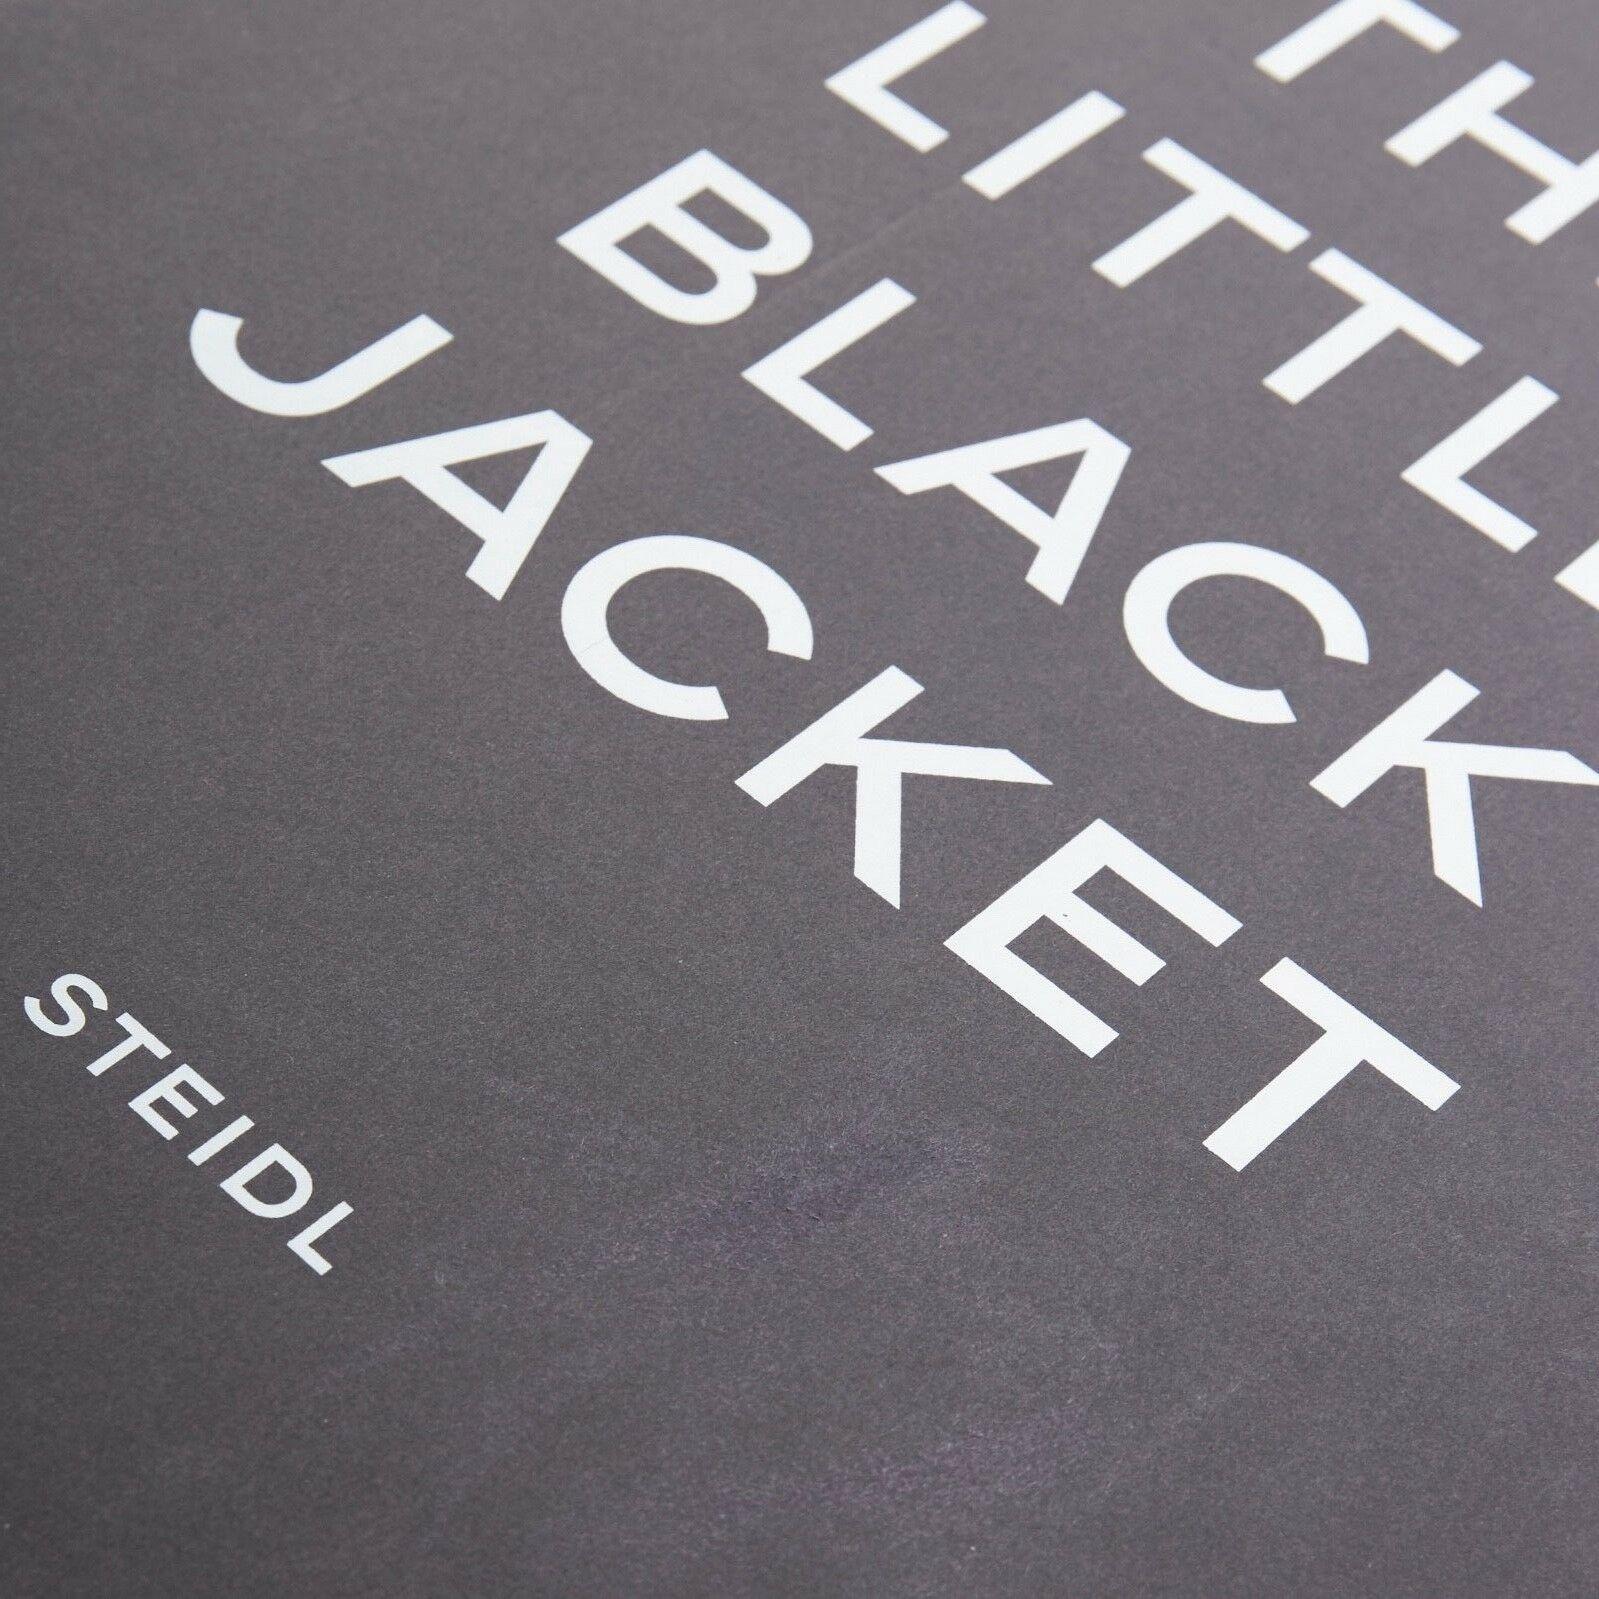 CHANEL Little Black Jacket by Karl Lagerfeld Carine Roitfeld Steidl book 1st Ed 1